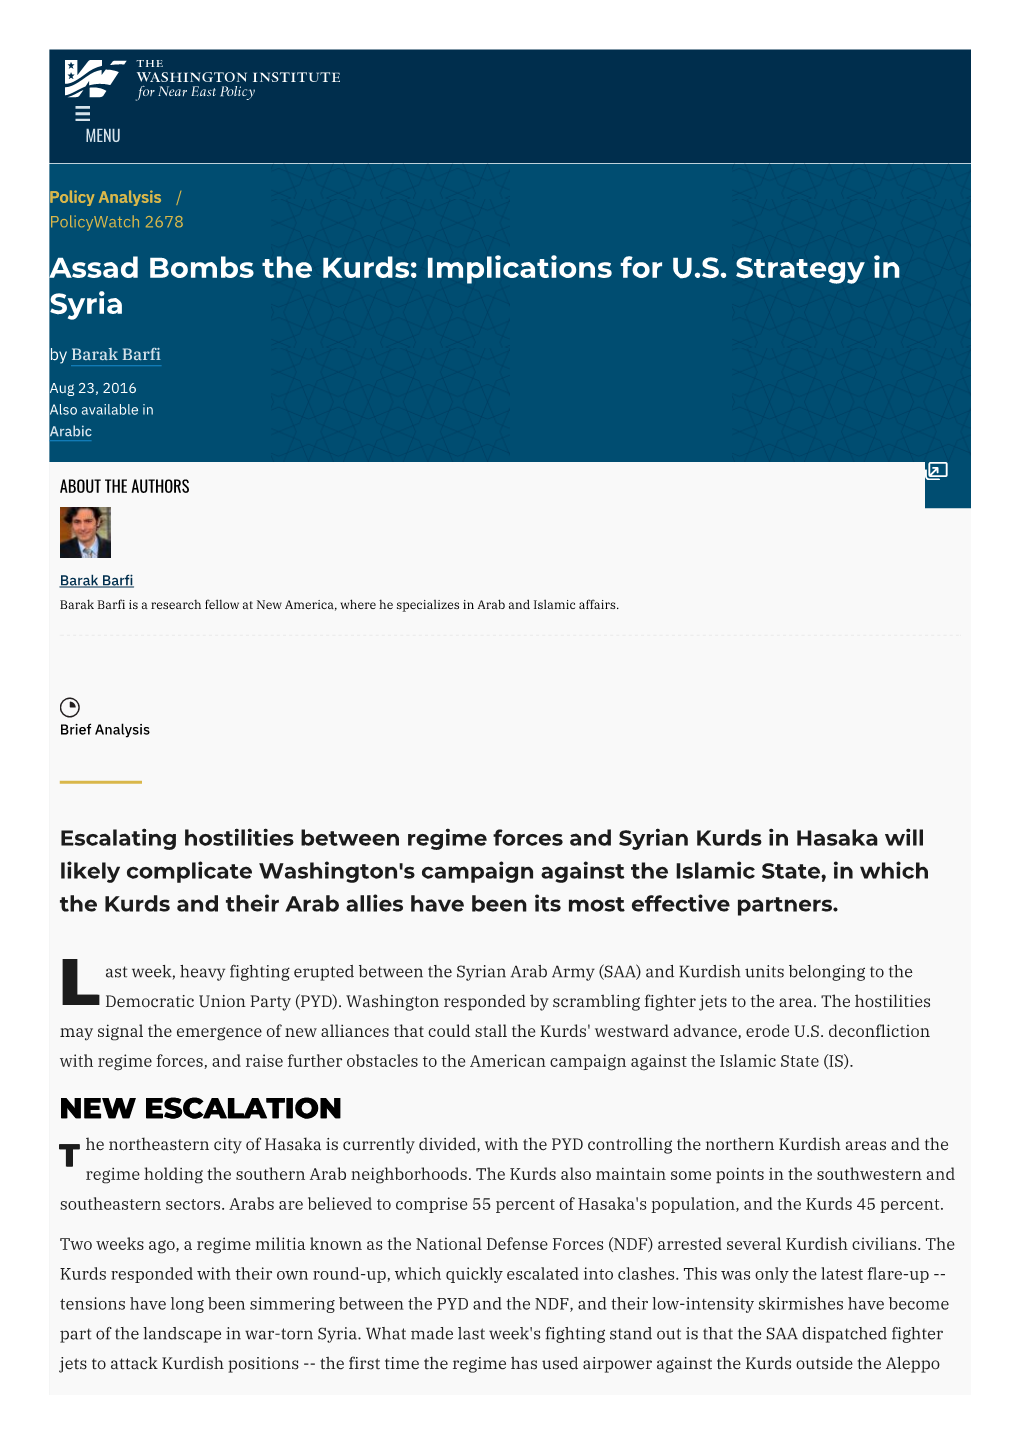 Assad Bombs the Kurds: Implications for U.S